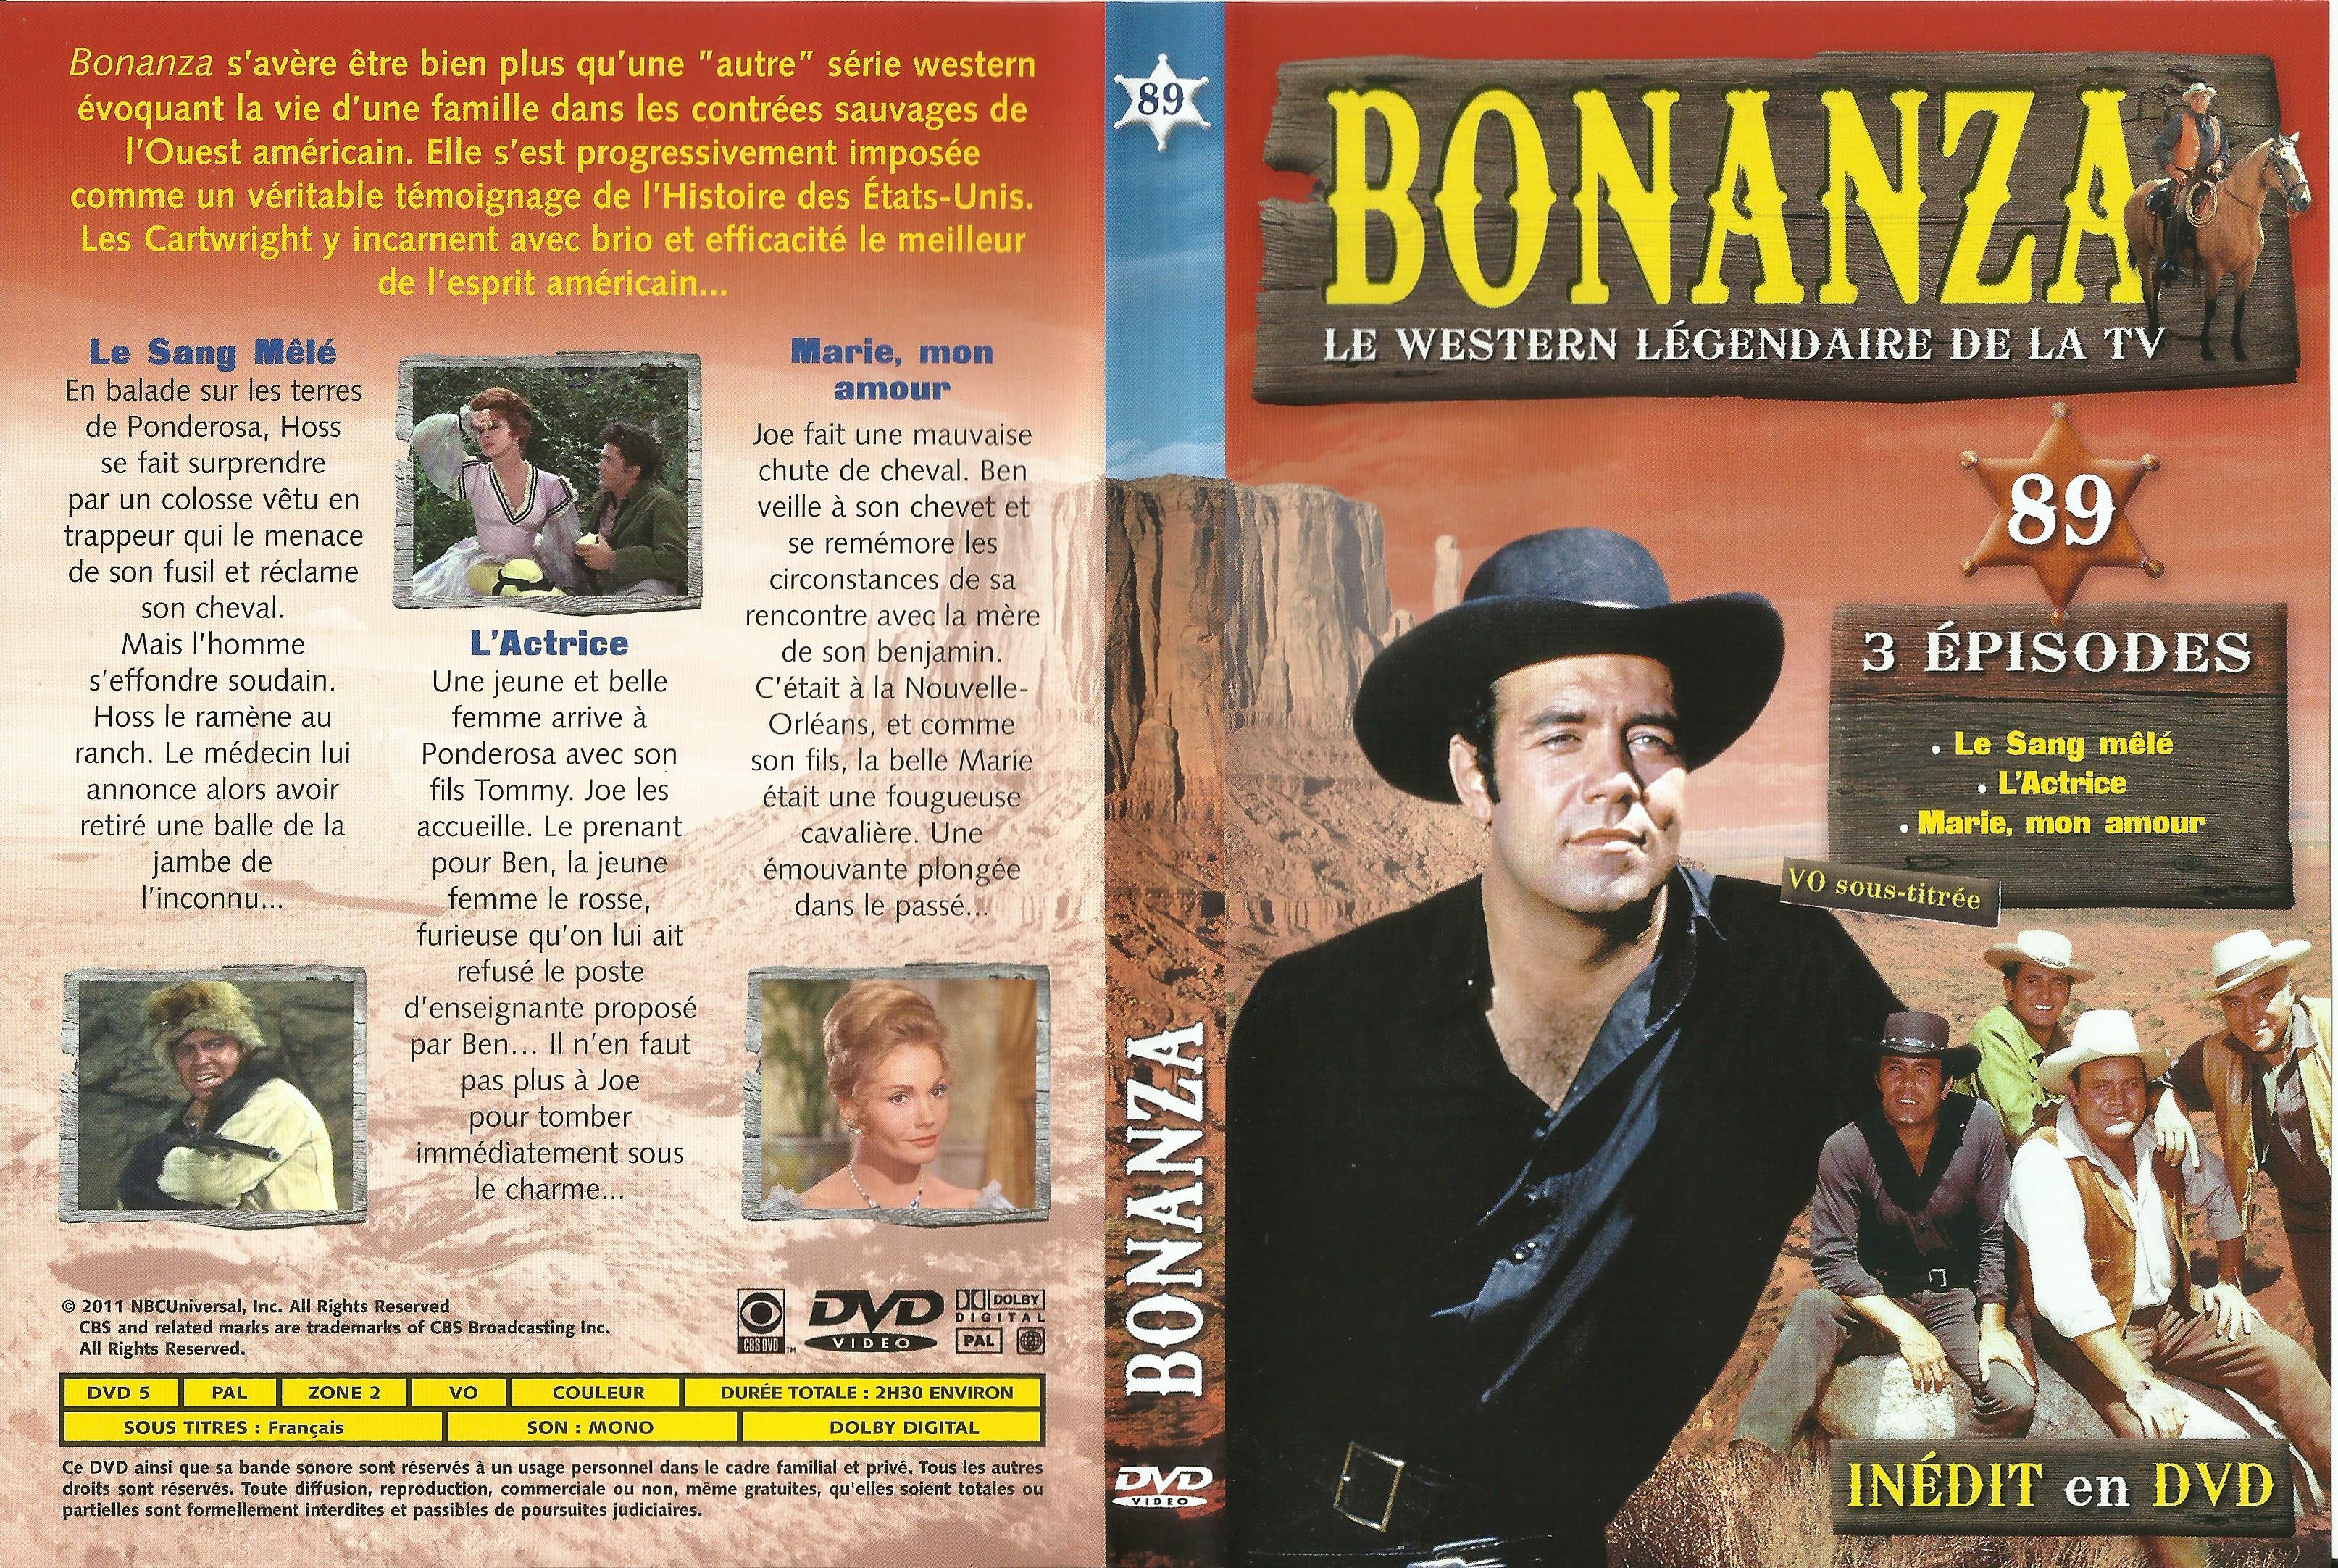 Jaquette DVD Bonanza vol 89